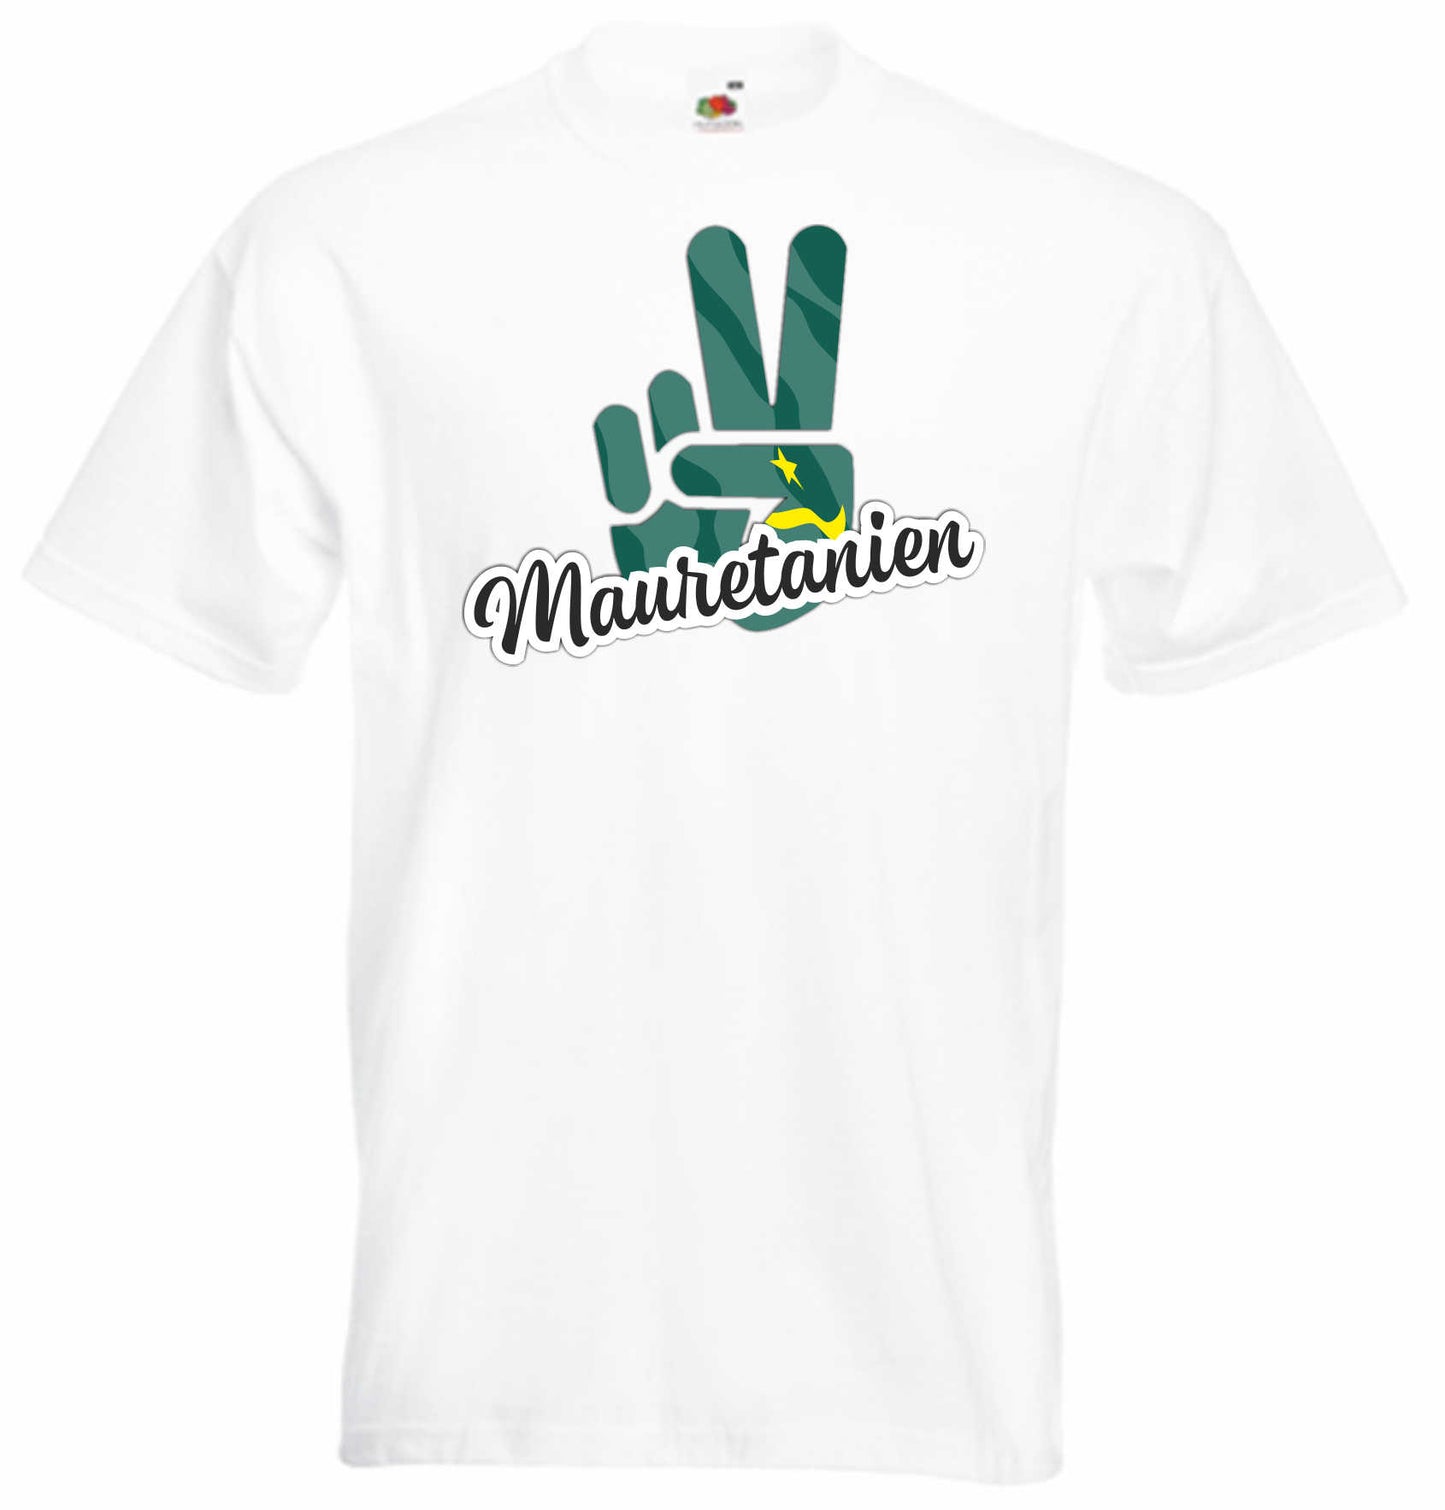 T-Shirt Herren - Victory - Flagge / Fahne - Mauretanien - Sieg